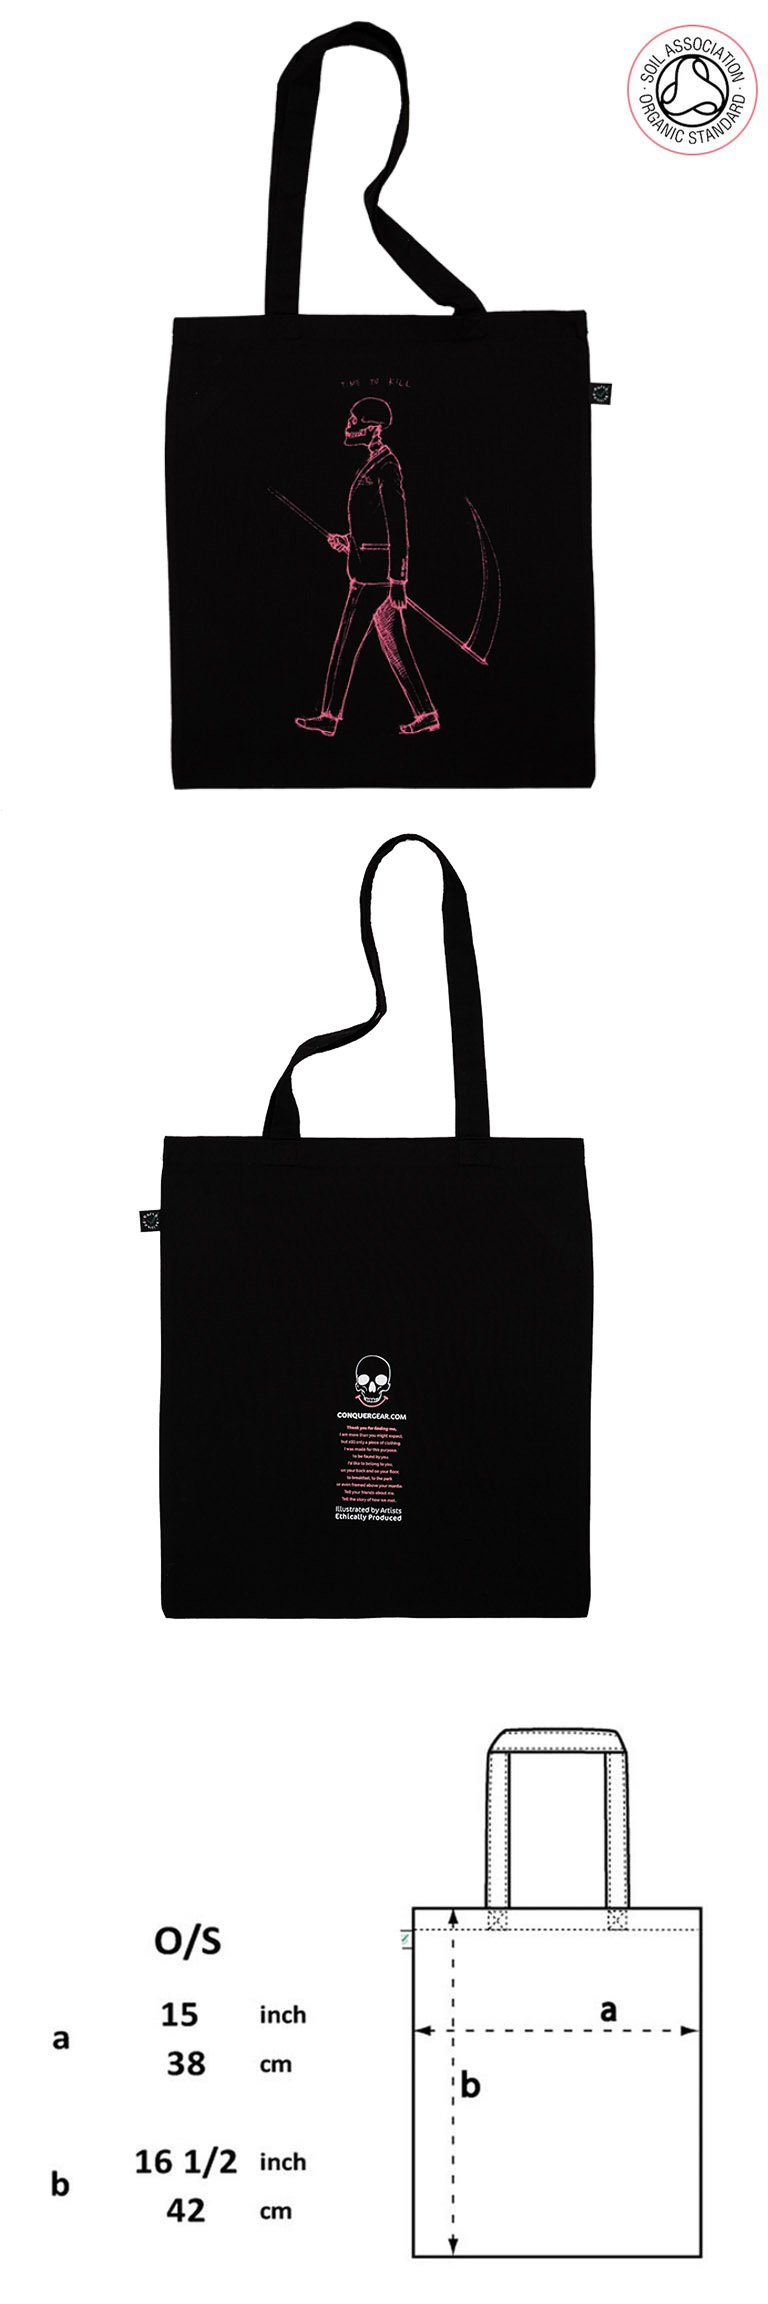 Mr Death Tote Bags (Various)